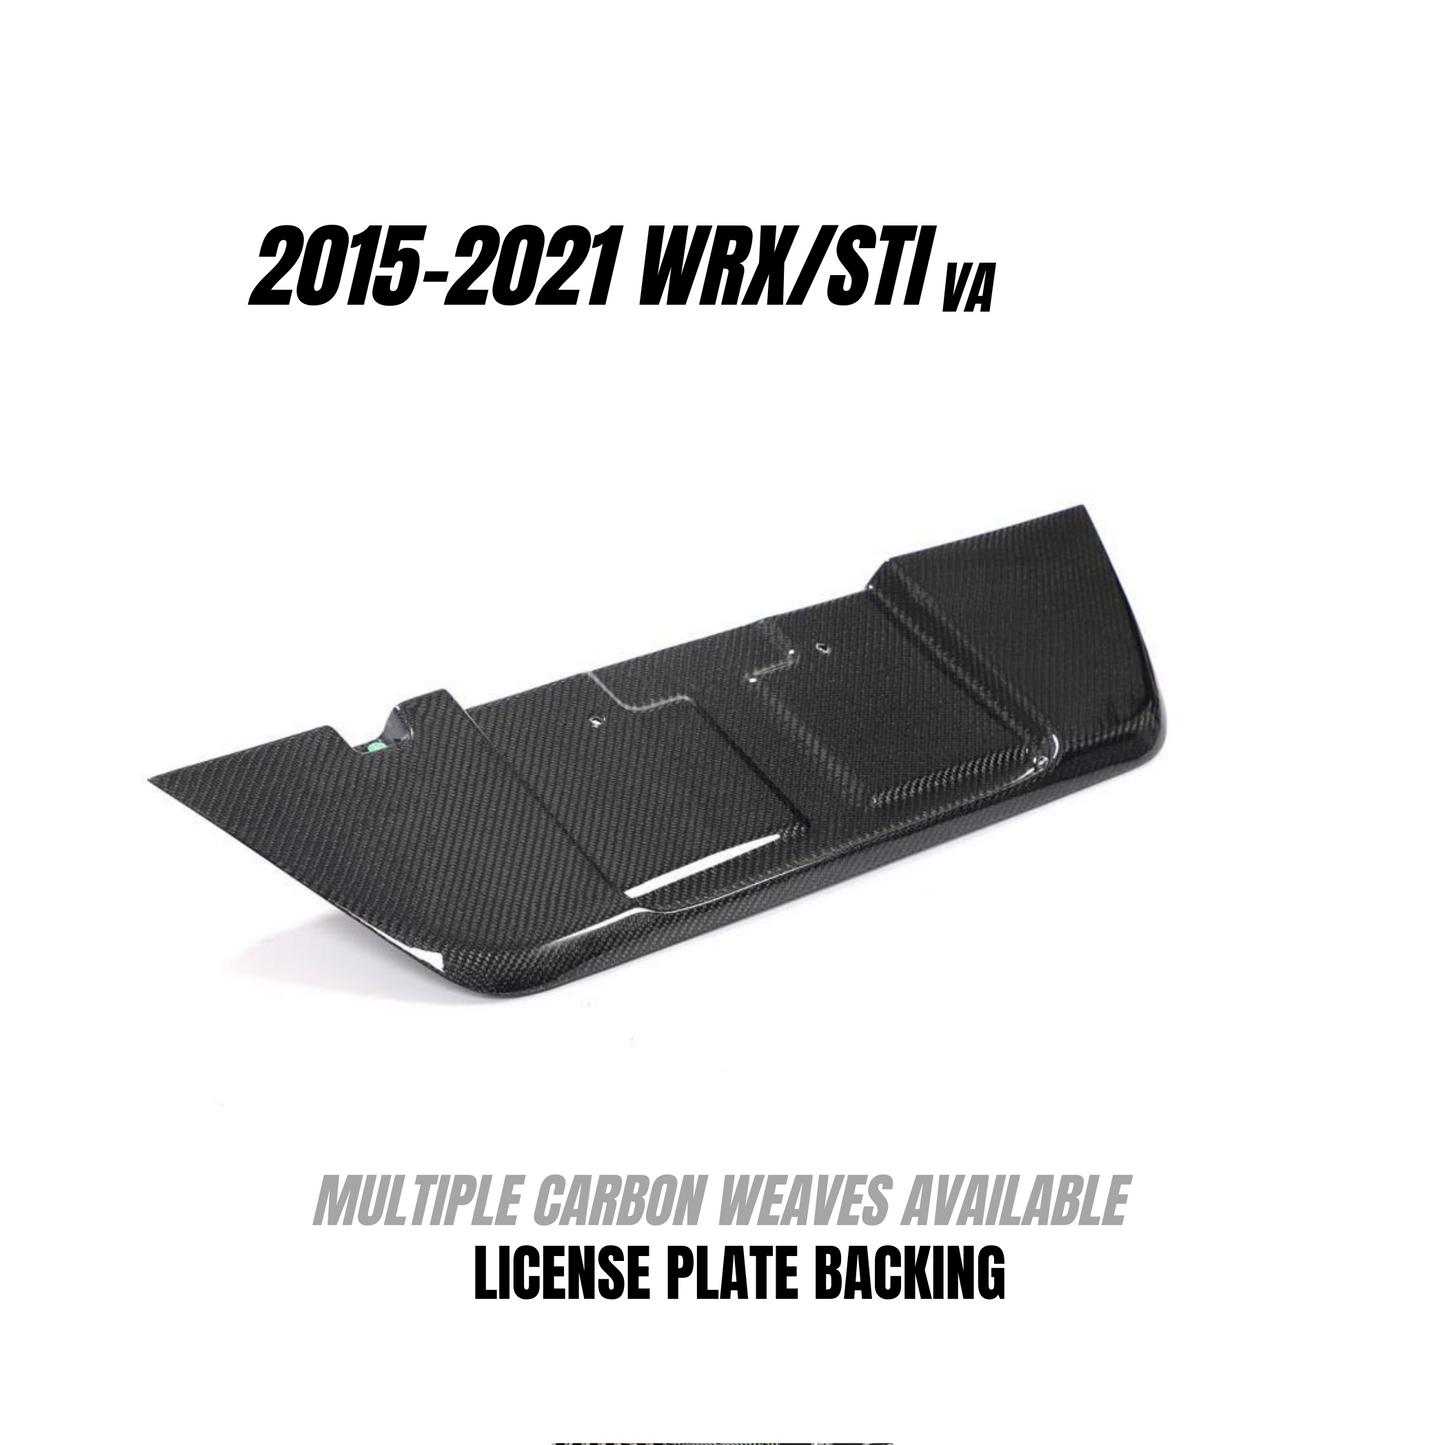 JDMuscle 2015-21 WRX/STI Carbon Fiber License Plate Backing | Carbon Fiber, Honey Comb Carbon Fiber, Forged Carbon Fiber